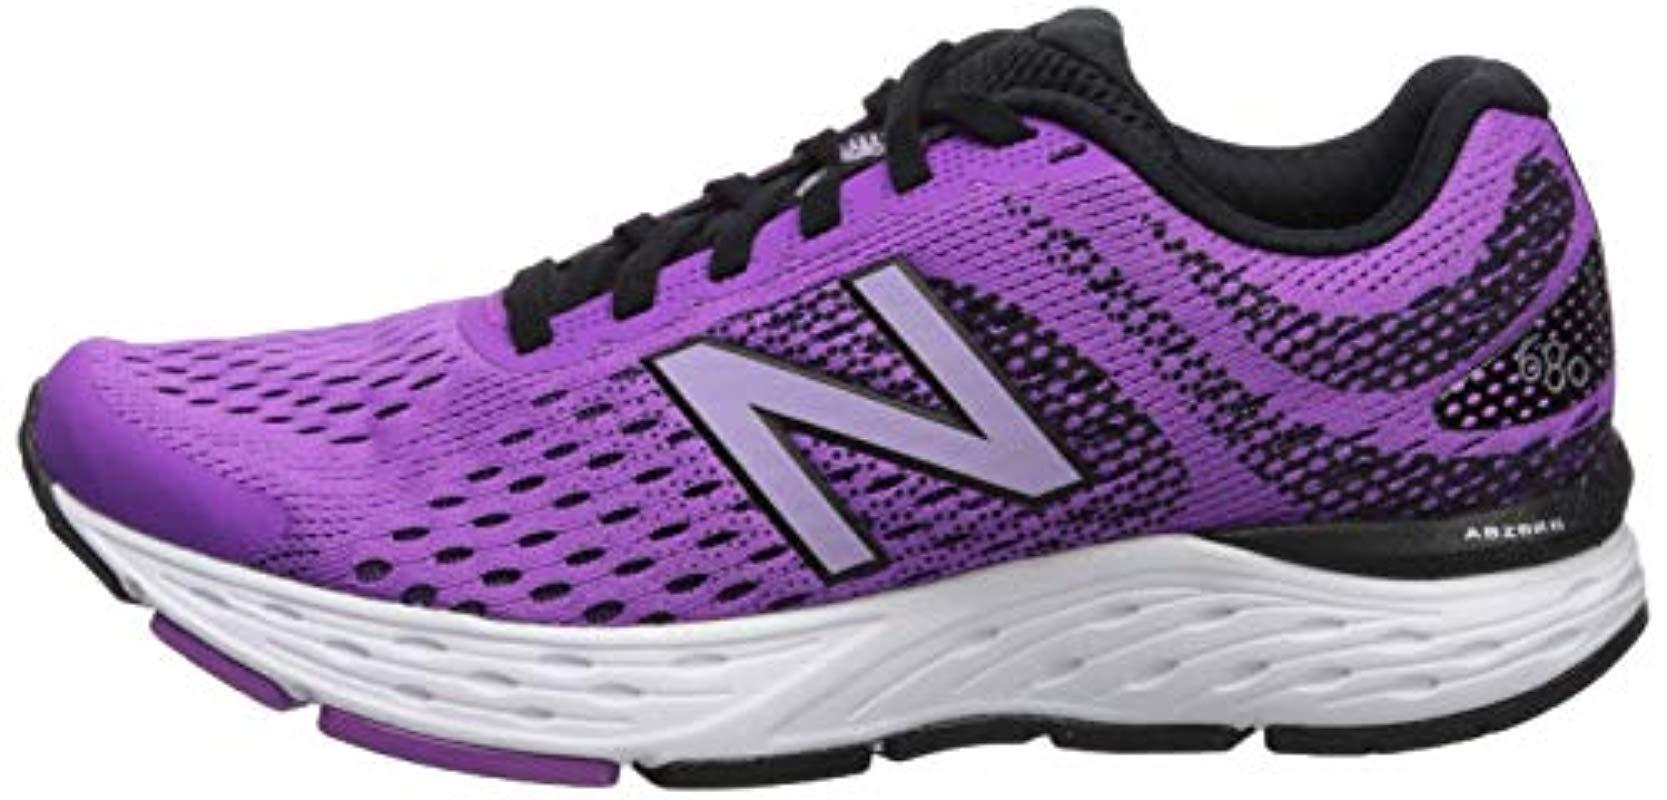 New Balance 680v6 Cushioning Running Shoe in Purple - Lyst